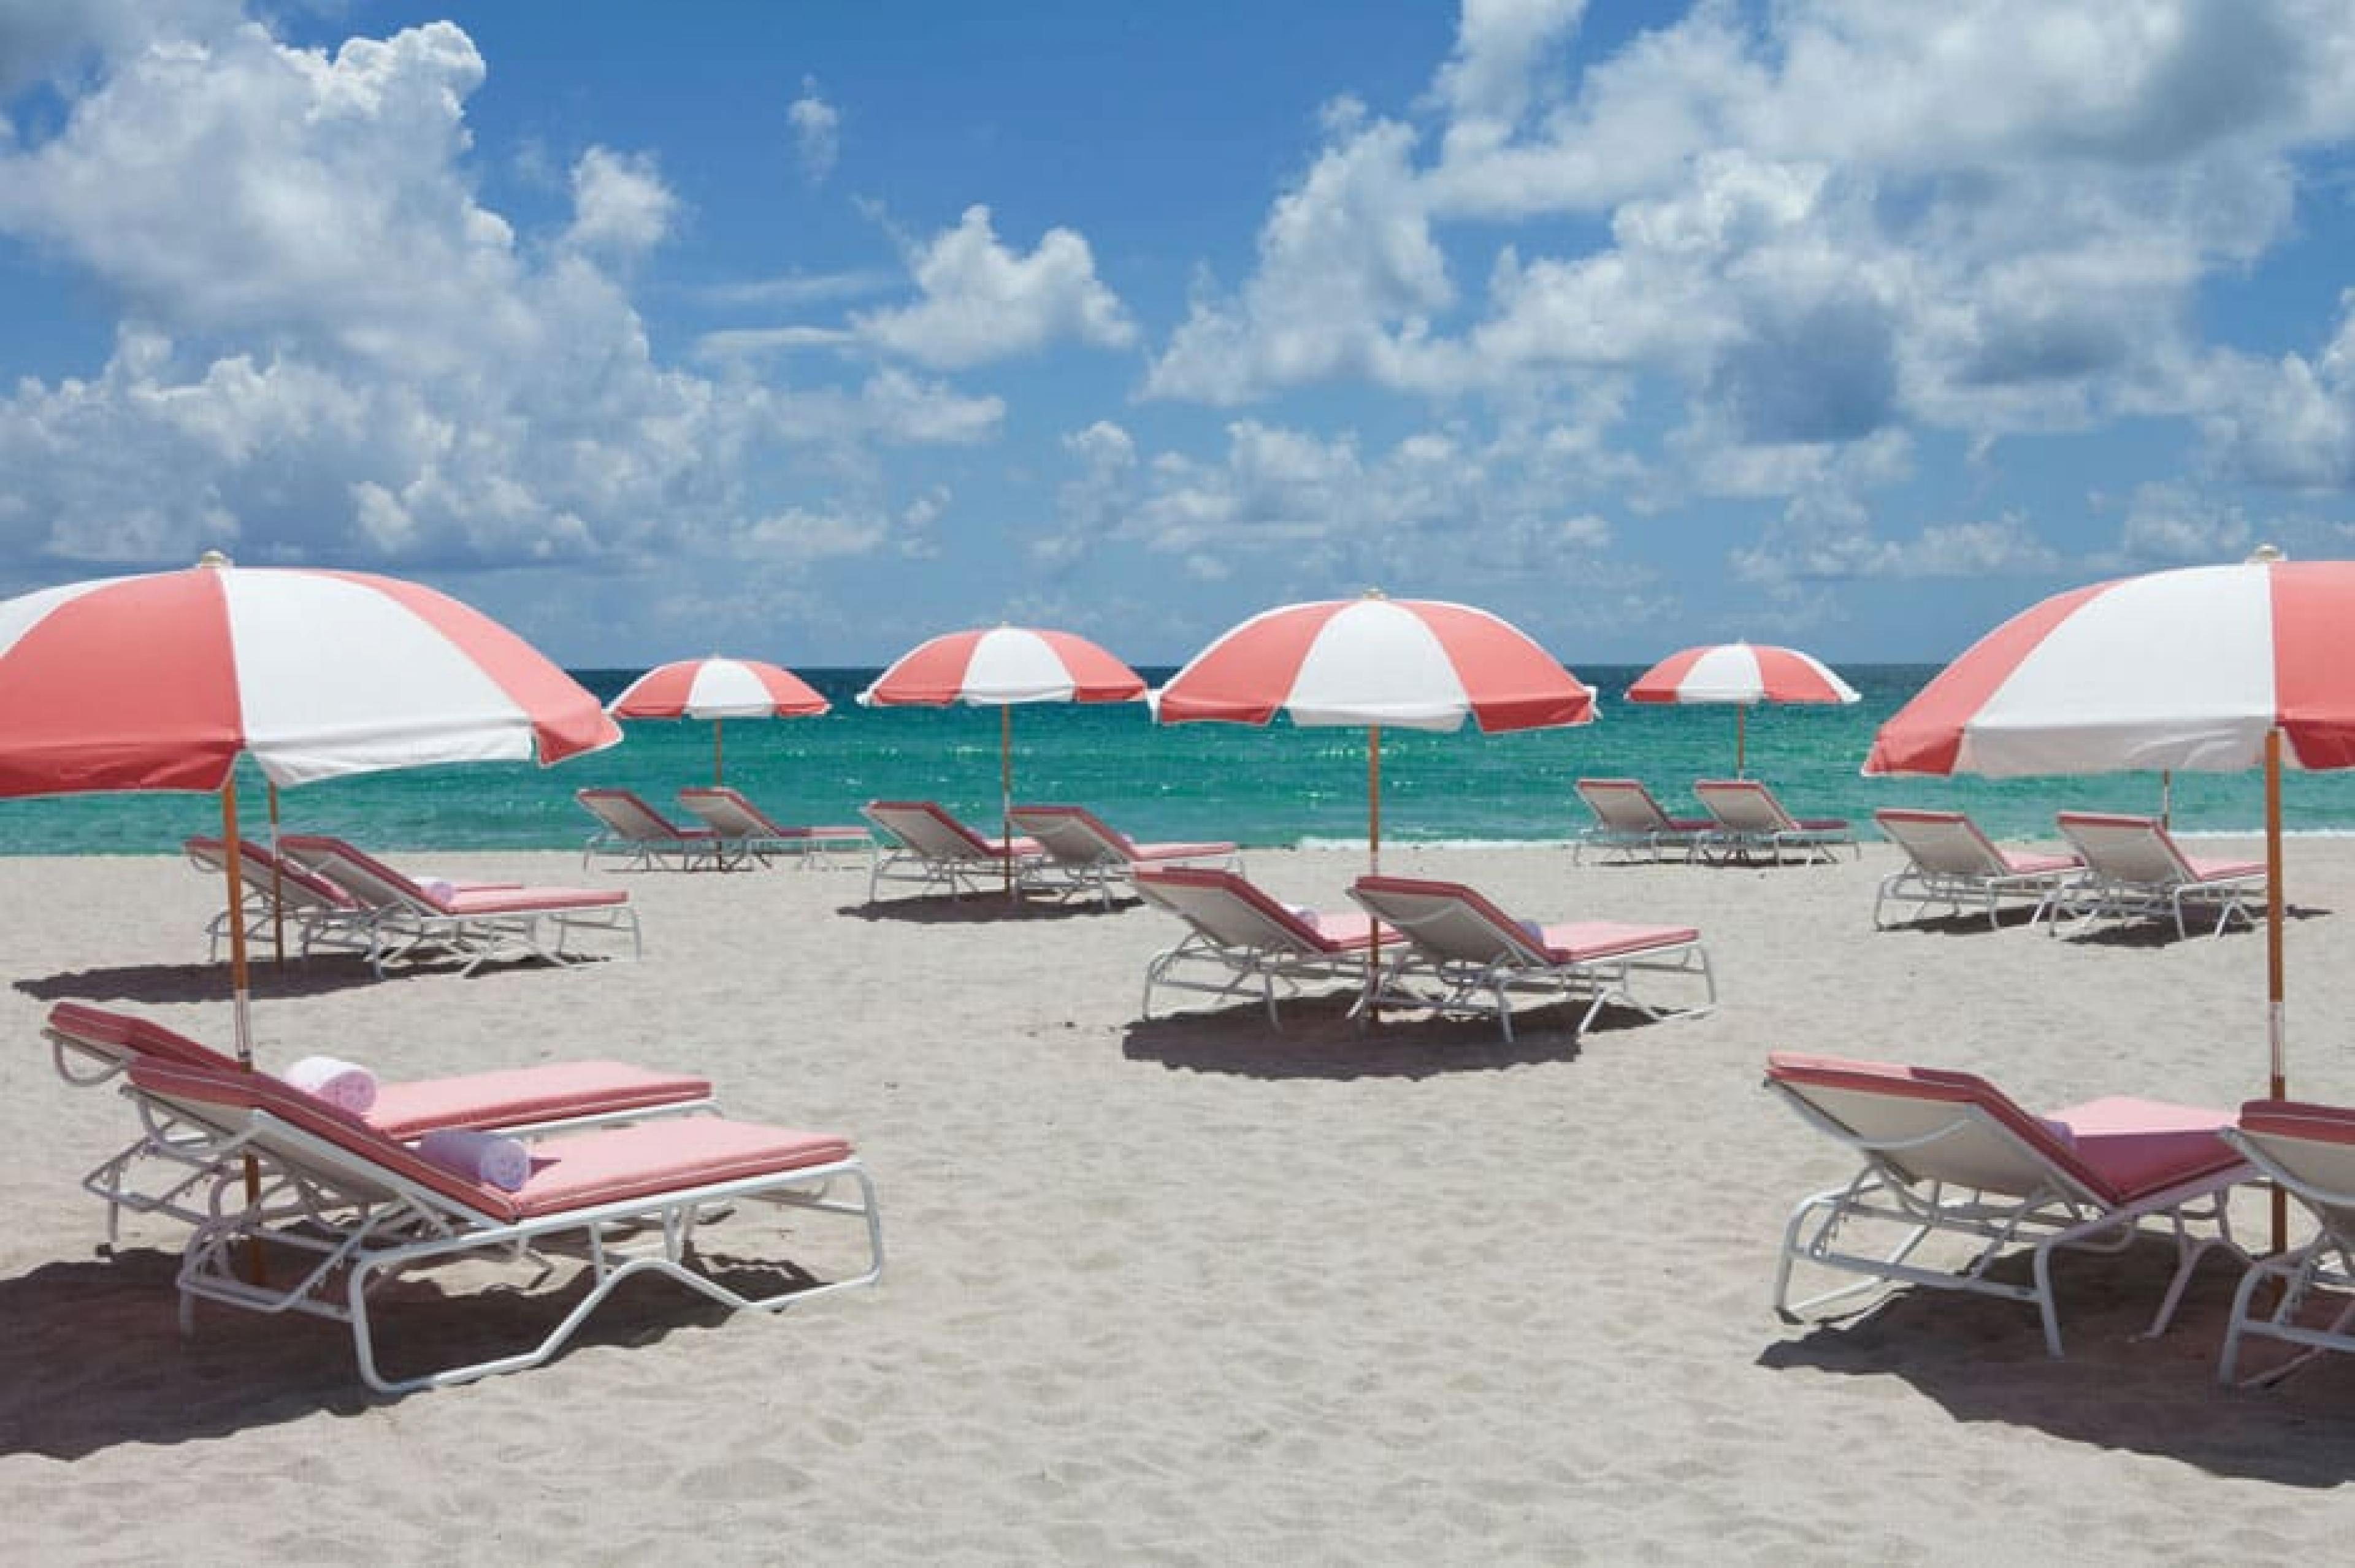 Beach Lounge at SLS Hotel South Beach, Miami, Florida - Courtesy of the SLS Hotel